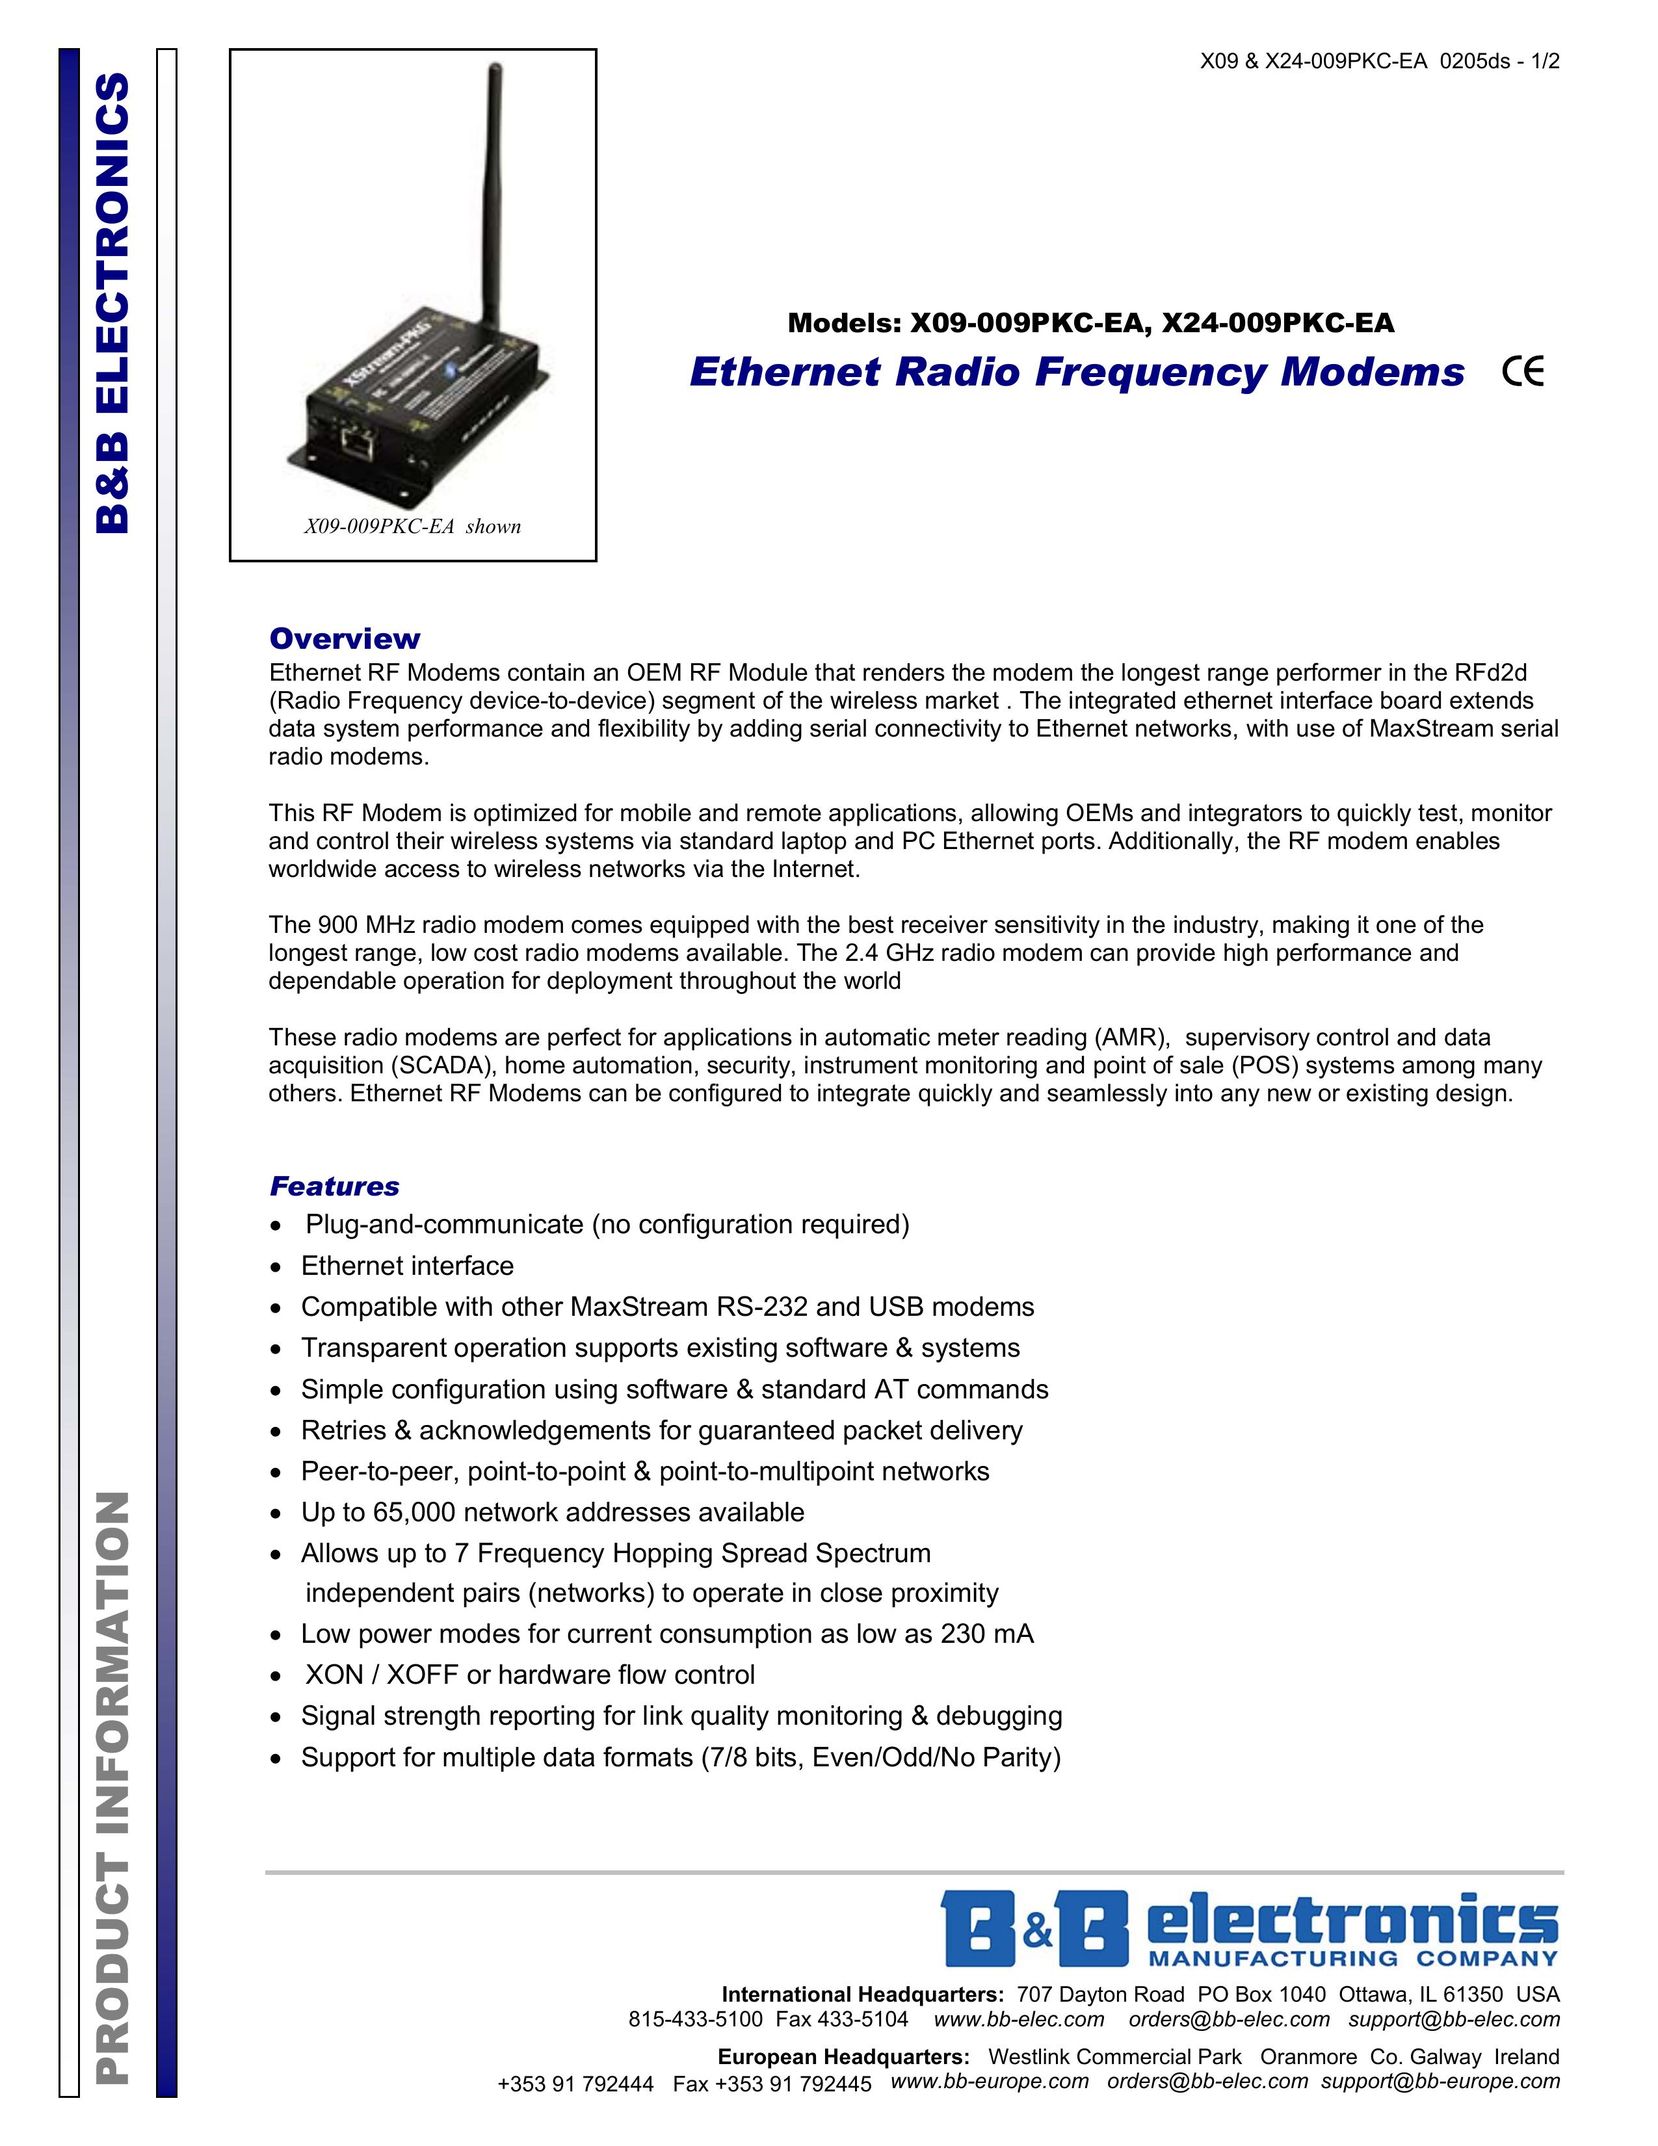 B&B Electronics X24-009PKC-EA Network Router User Manual